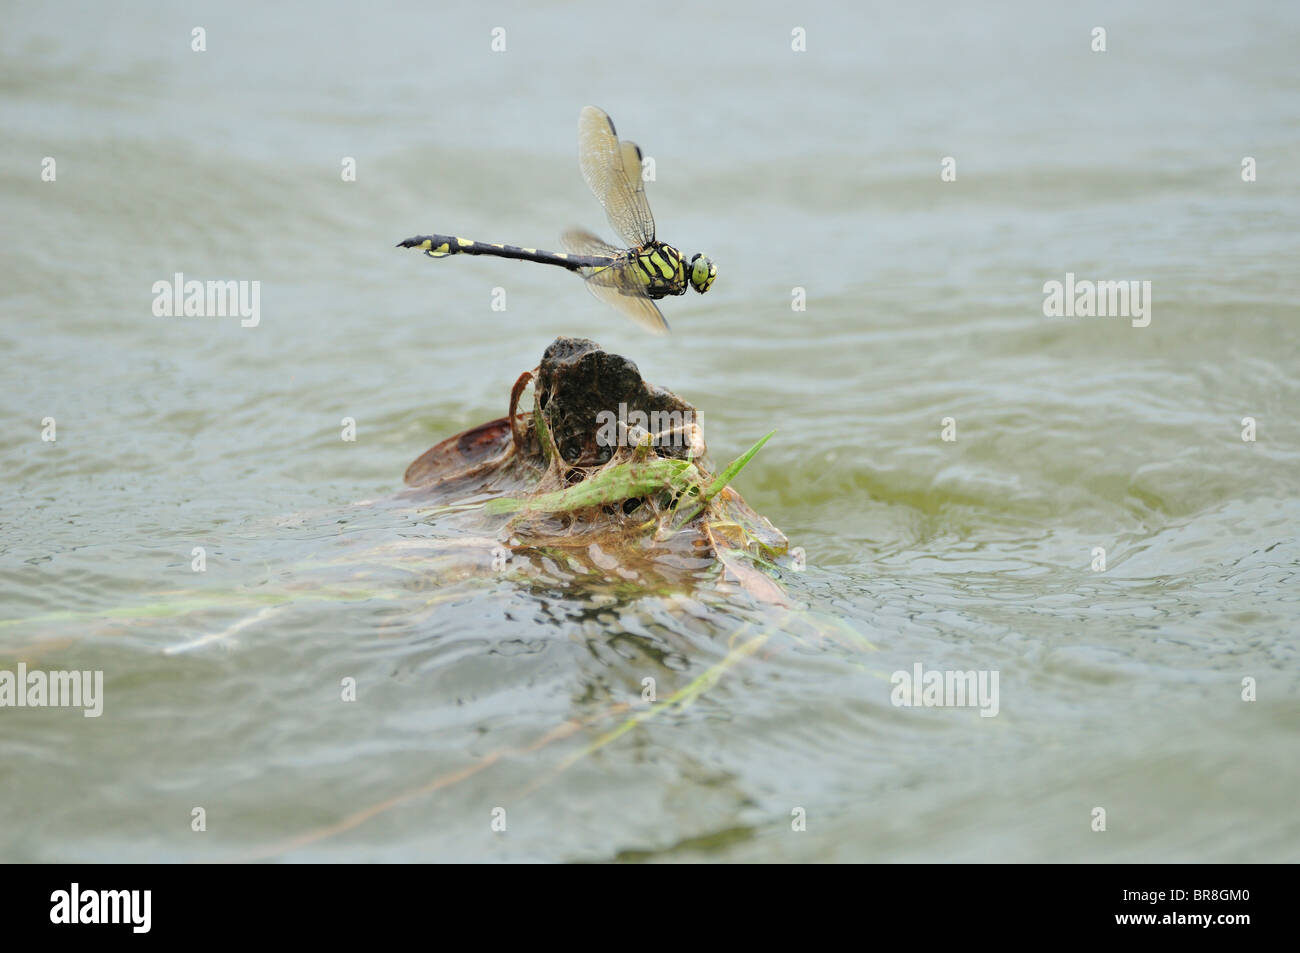 Sinictinogomphus clavatus flying over water Stock Photo